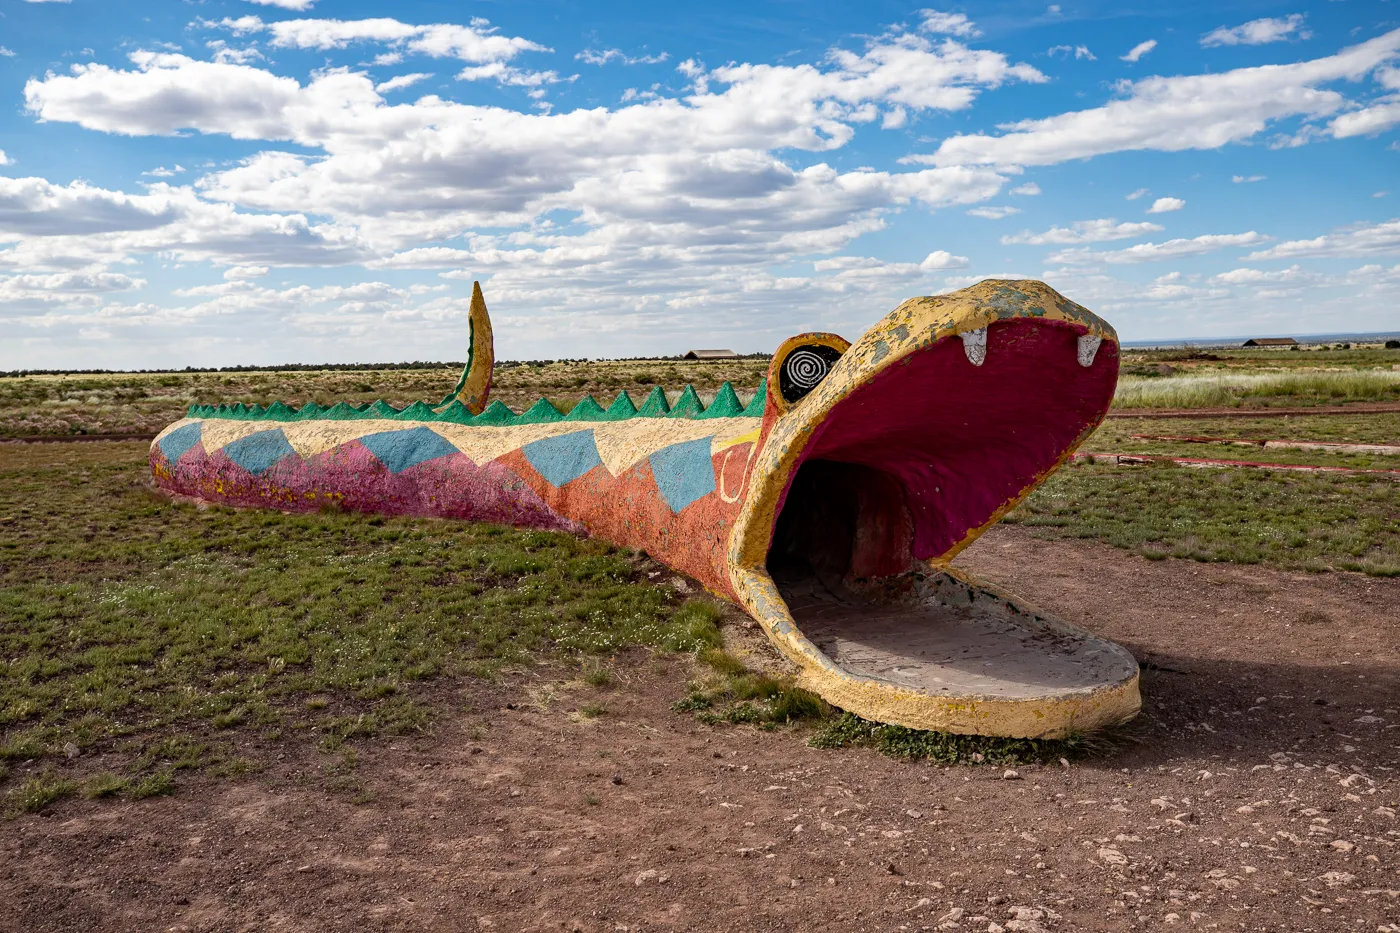 Giant crawl-through Rocky the Snake at Flintstones Bedrock City in Williams, Arizona